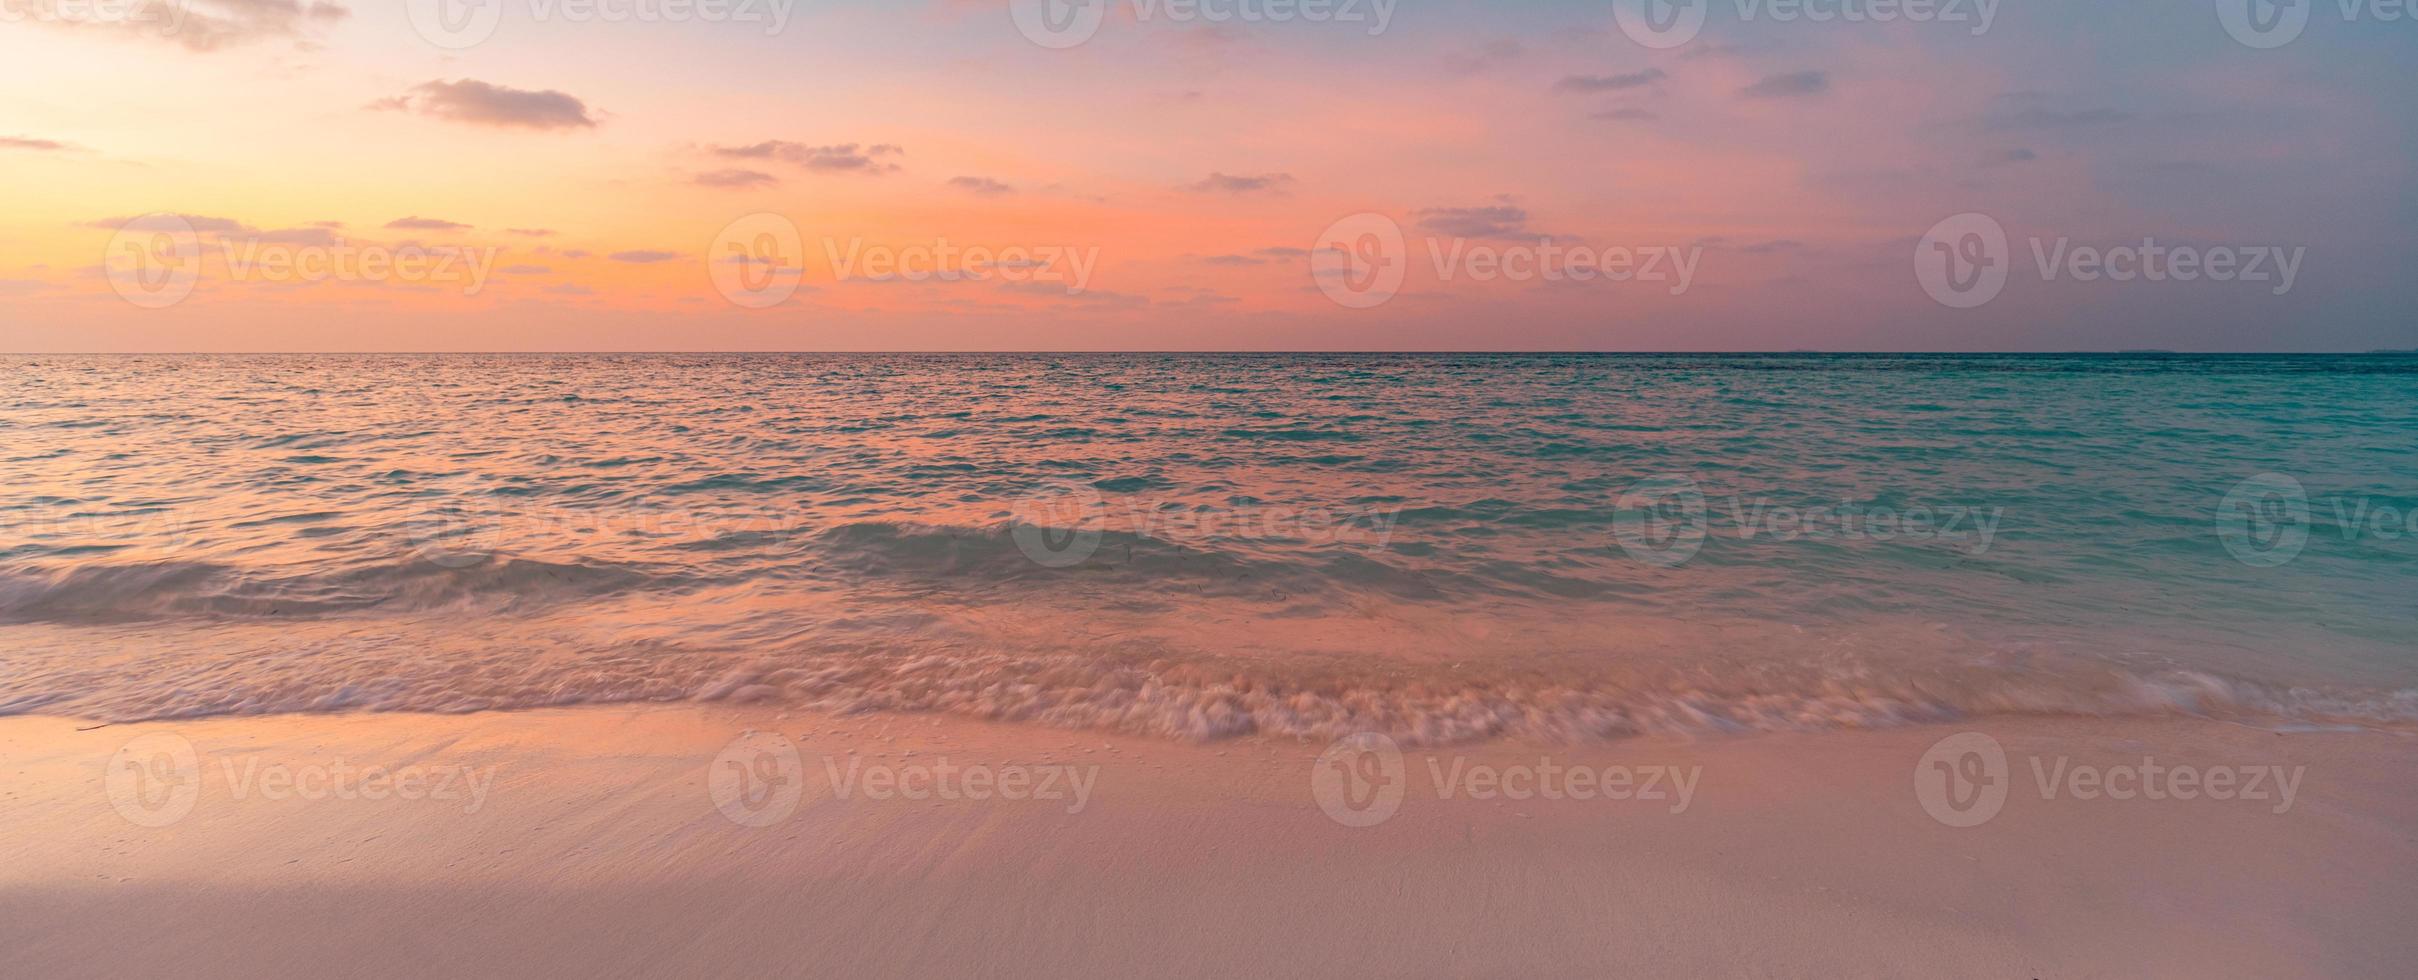 detailopname zee zand strand. panoramisch strand landschap. inspireren tropisch strand zeegezicht horizon. gouden droom zonsondergang lucht, kalmte rustig ontspannende zonlicht zomer kust golven. vakantie reizen vakantie banier foto